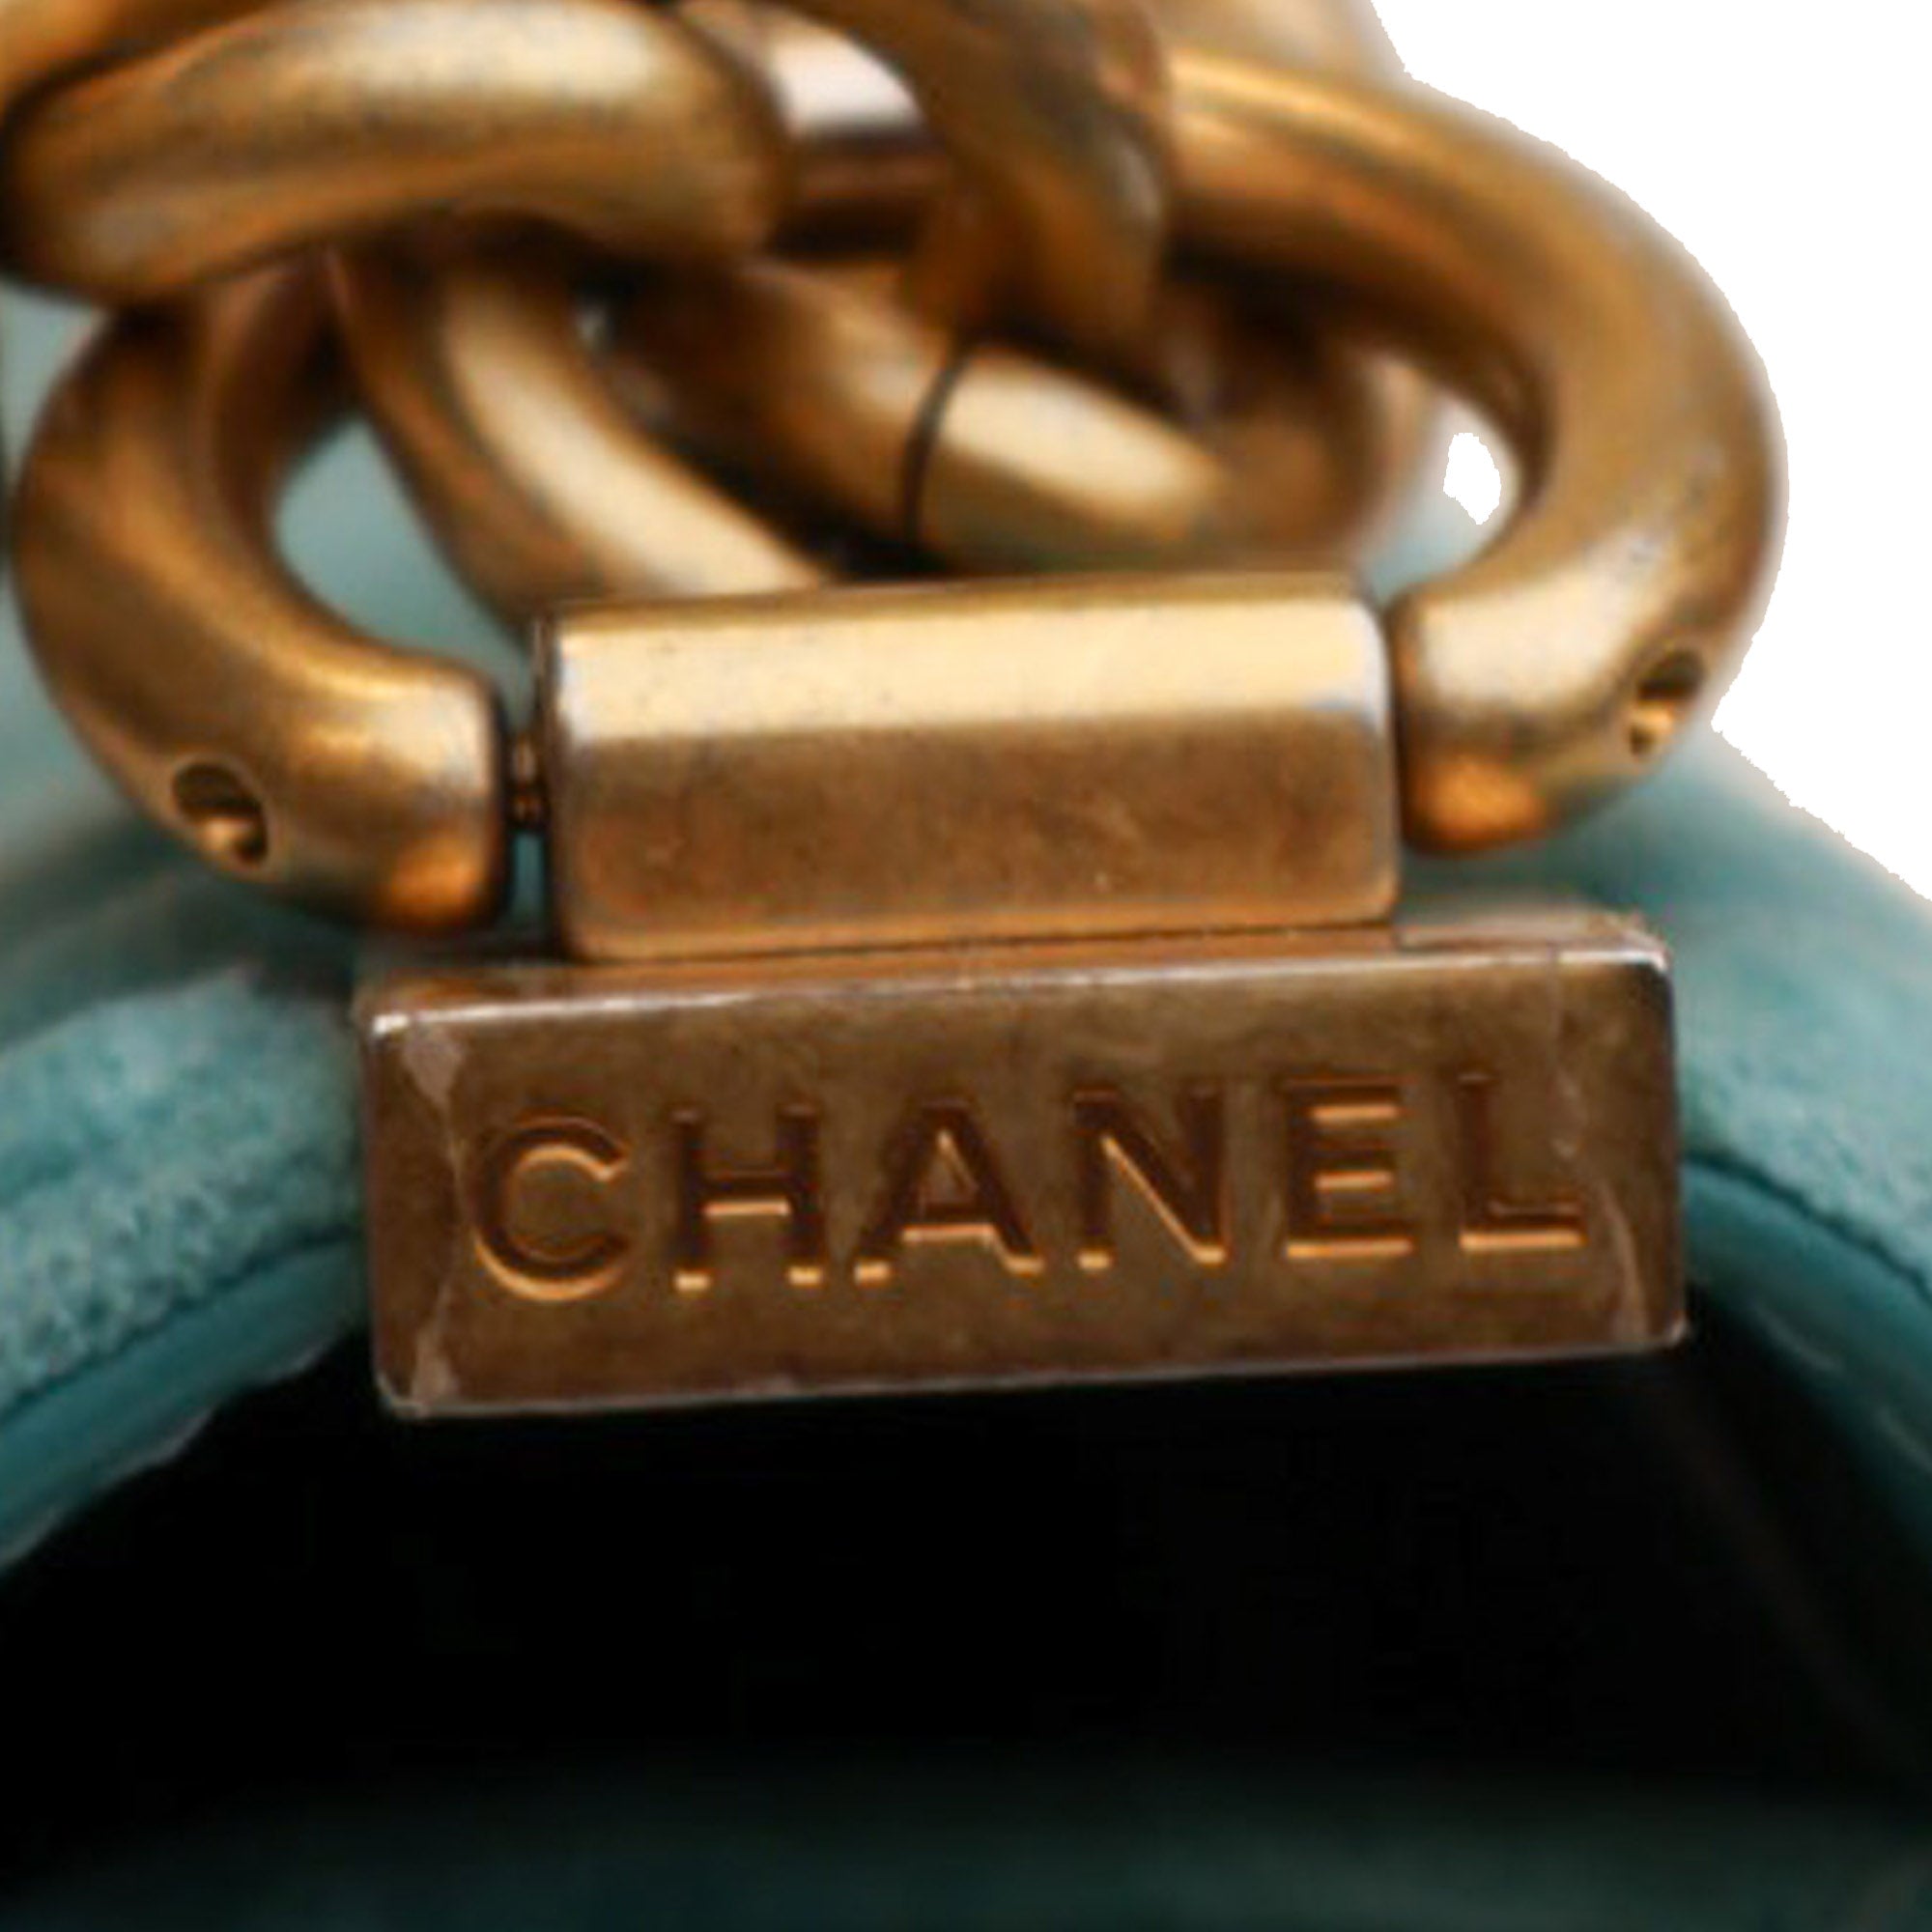 Chanel Royal Blue Velvet Small Boy Bag, myGemma, QA